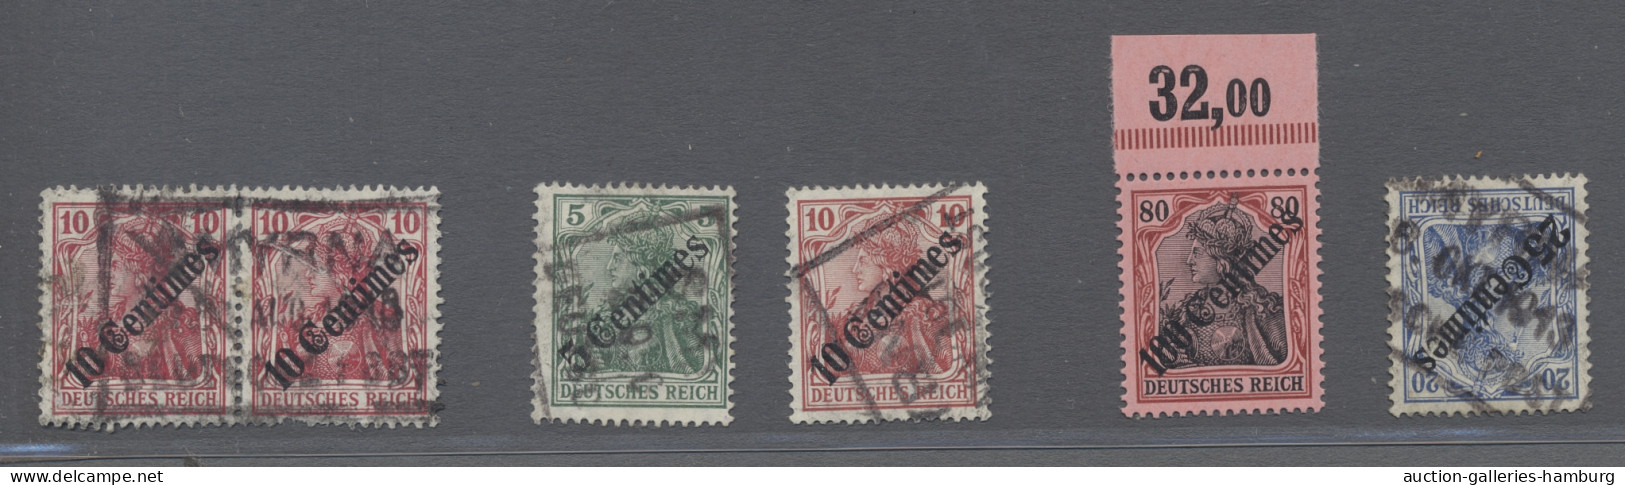 **/*/o Deutsche Post In Marokko: 1908, Germania Mit Diagonalem Aufdruck, 5 C. - 100 C. - Maroc (bureaux)